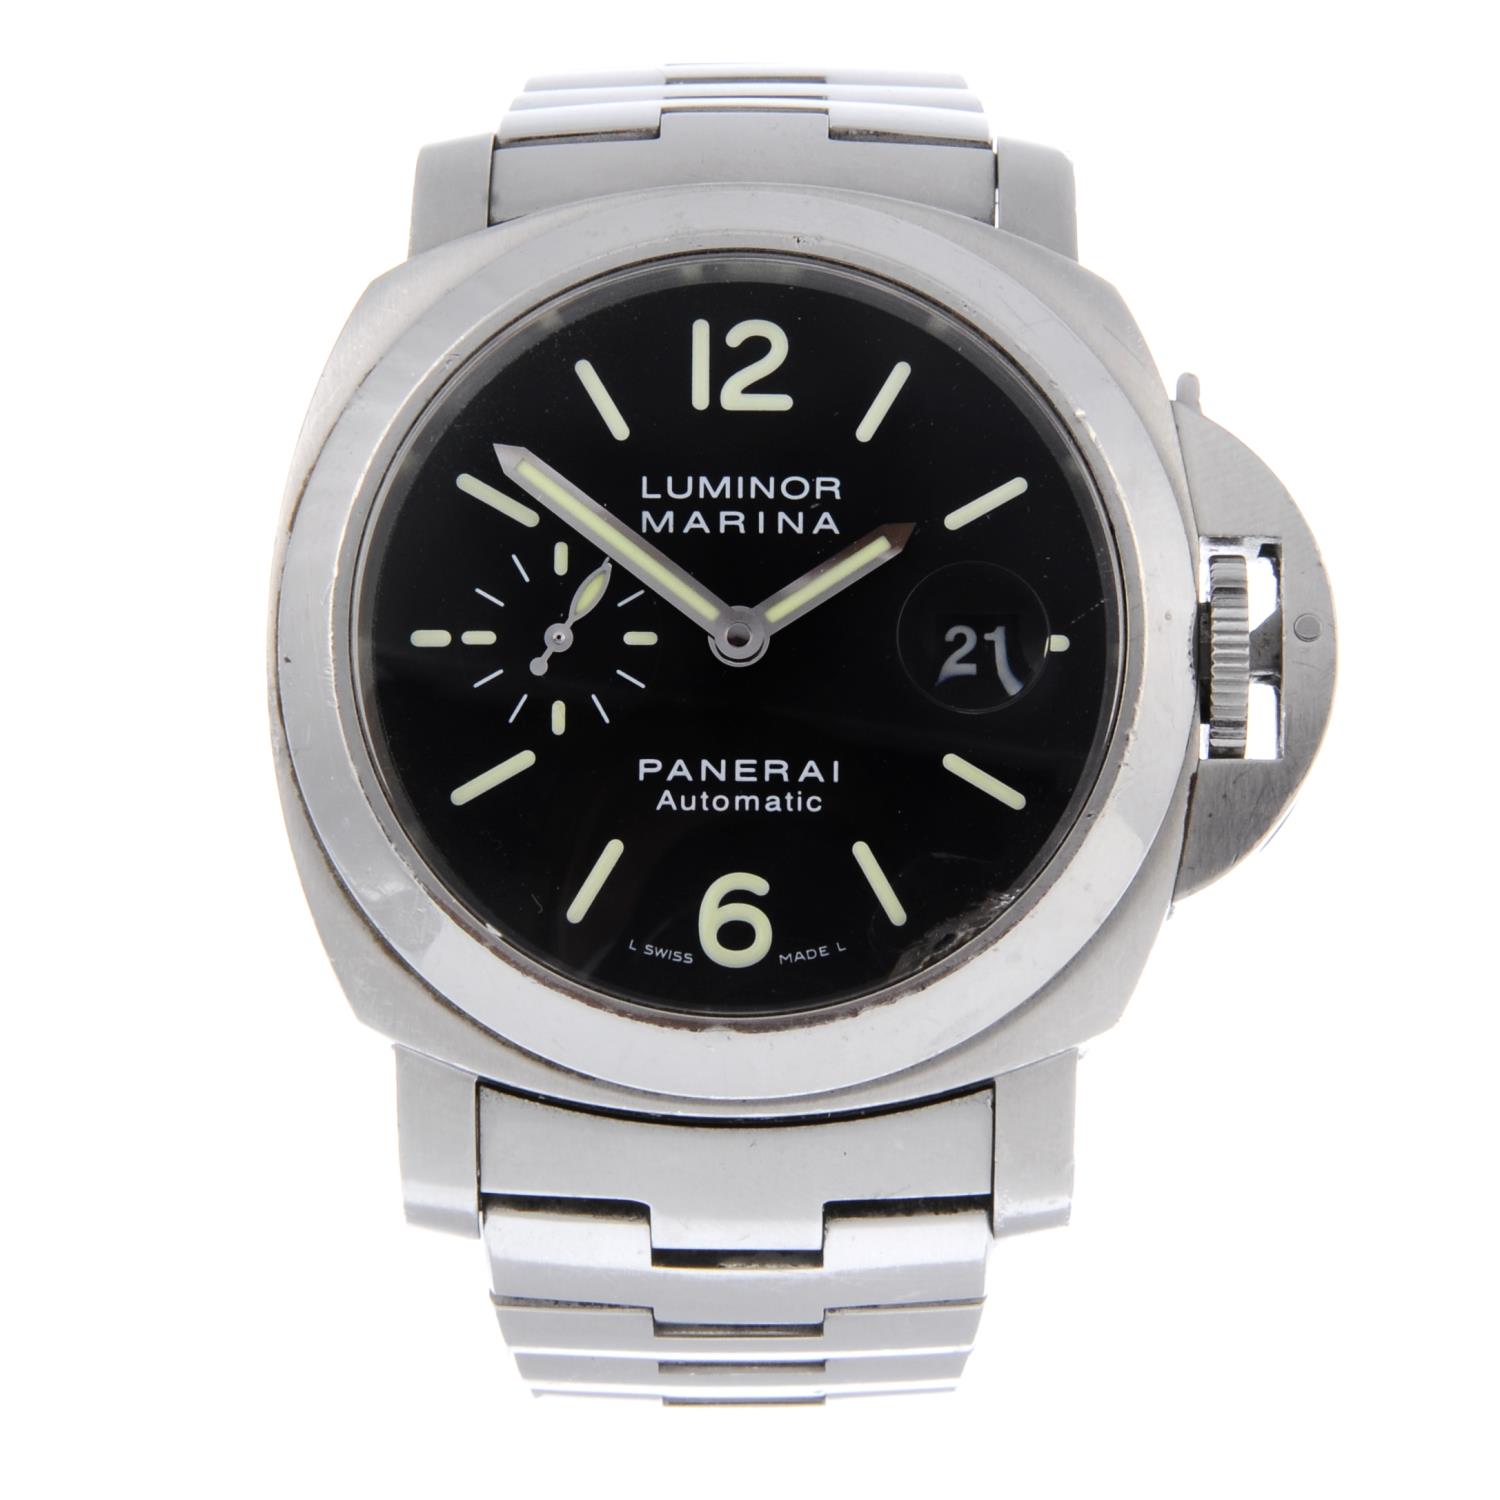 PANERAI - a gentleman's Luminor Marina bracelet watch.